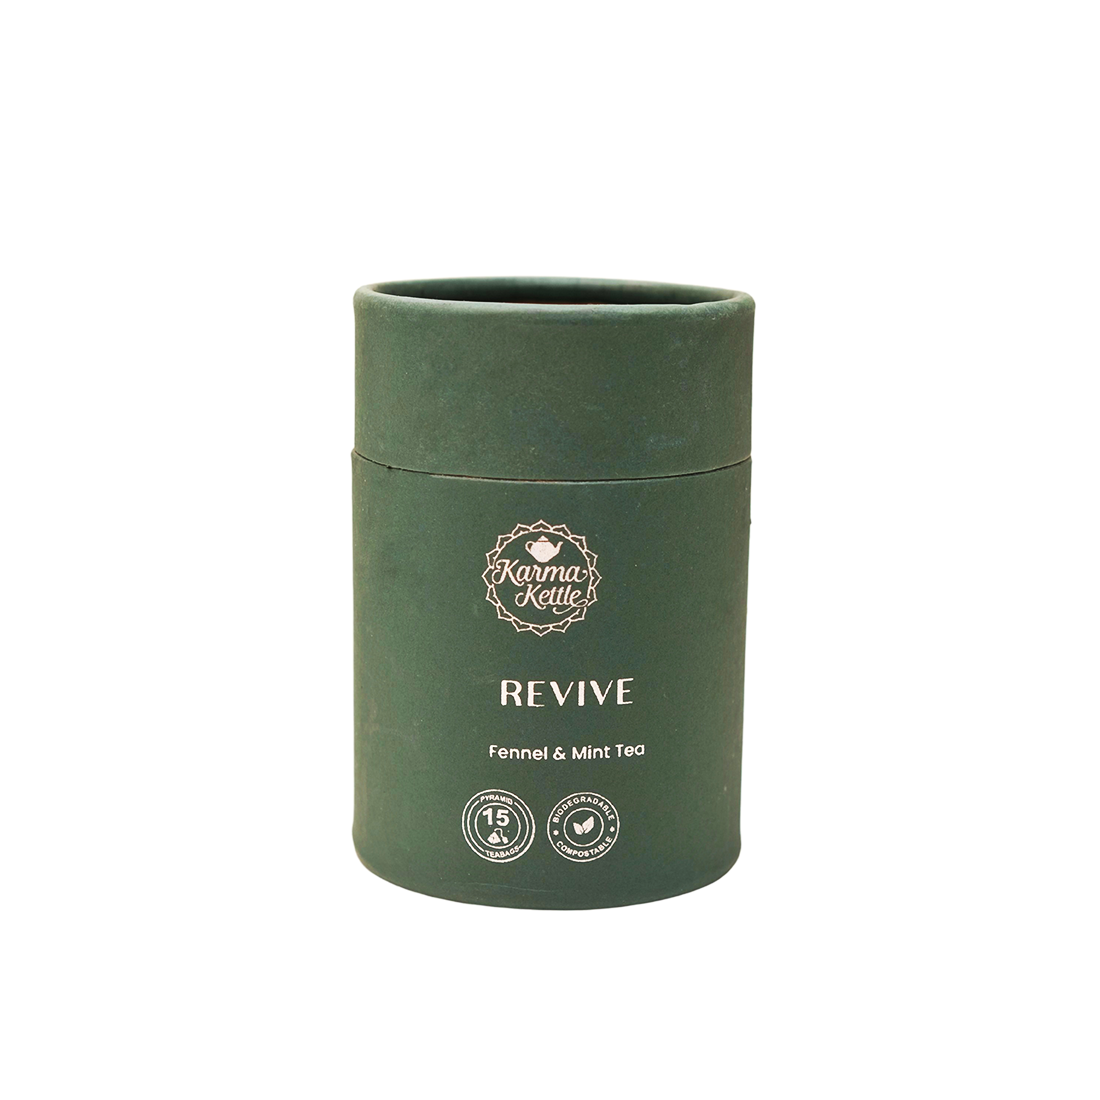 Karma Kettle Fennel & Mint Tea- Revive 30g (15 Tea Bags)